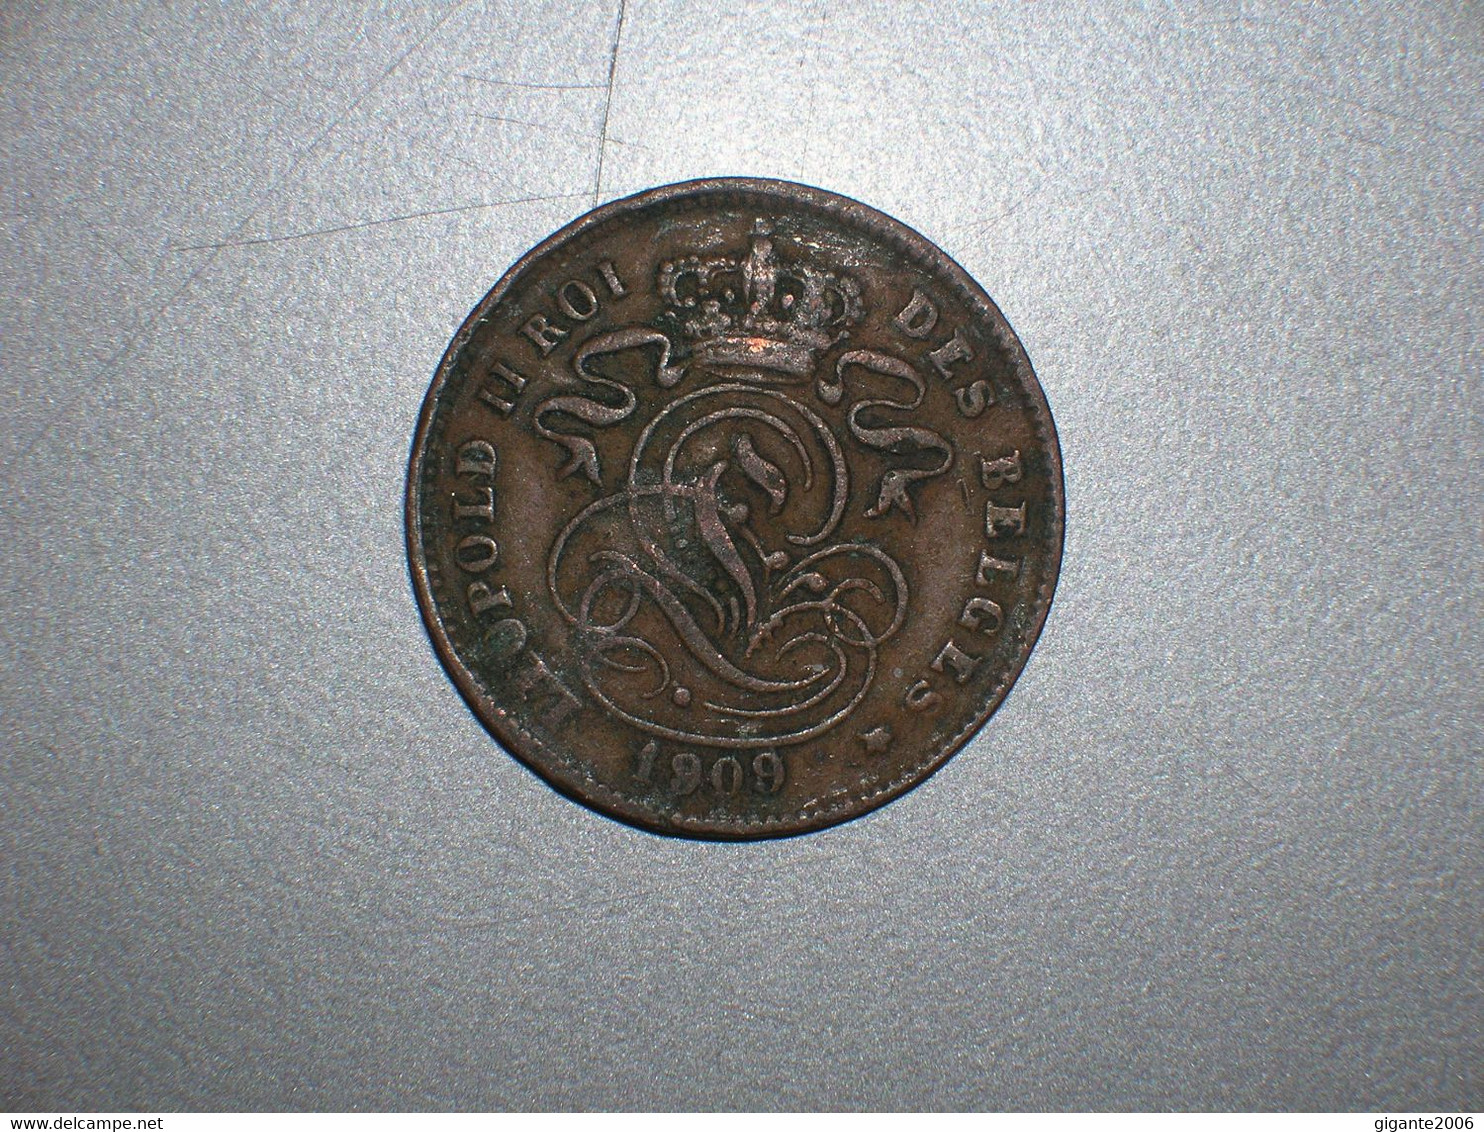 BELGICA 2 CENTIMOS 1909 FR (1658) - 2 Cents